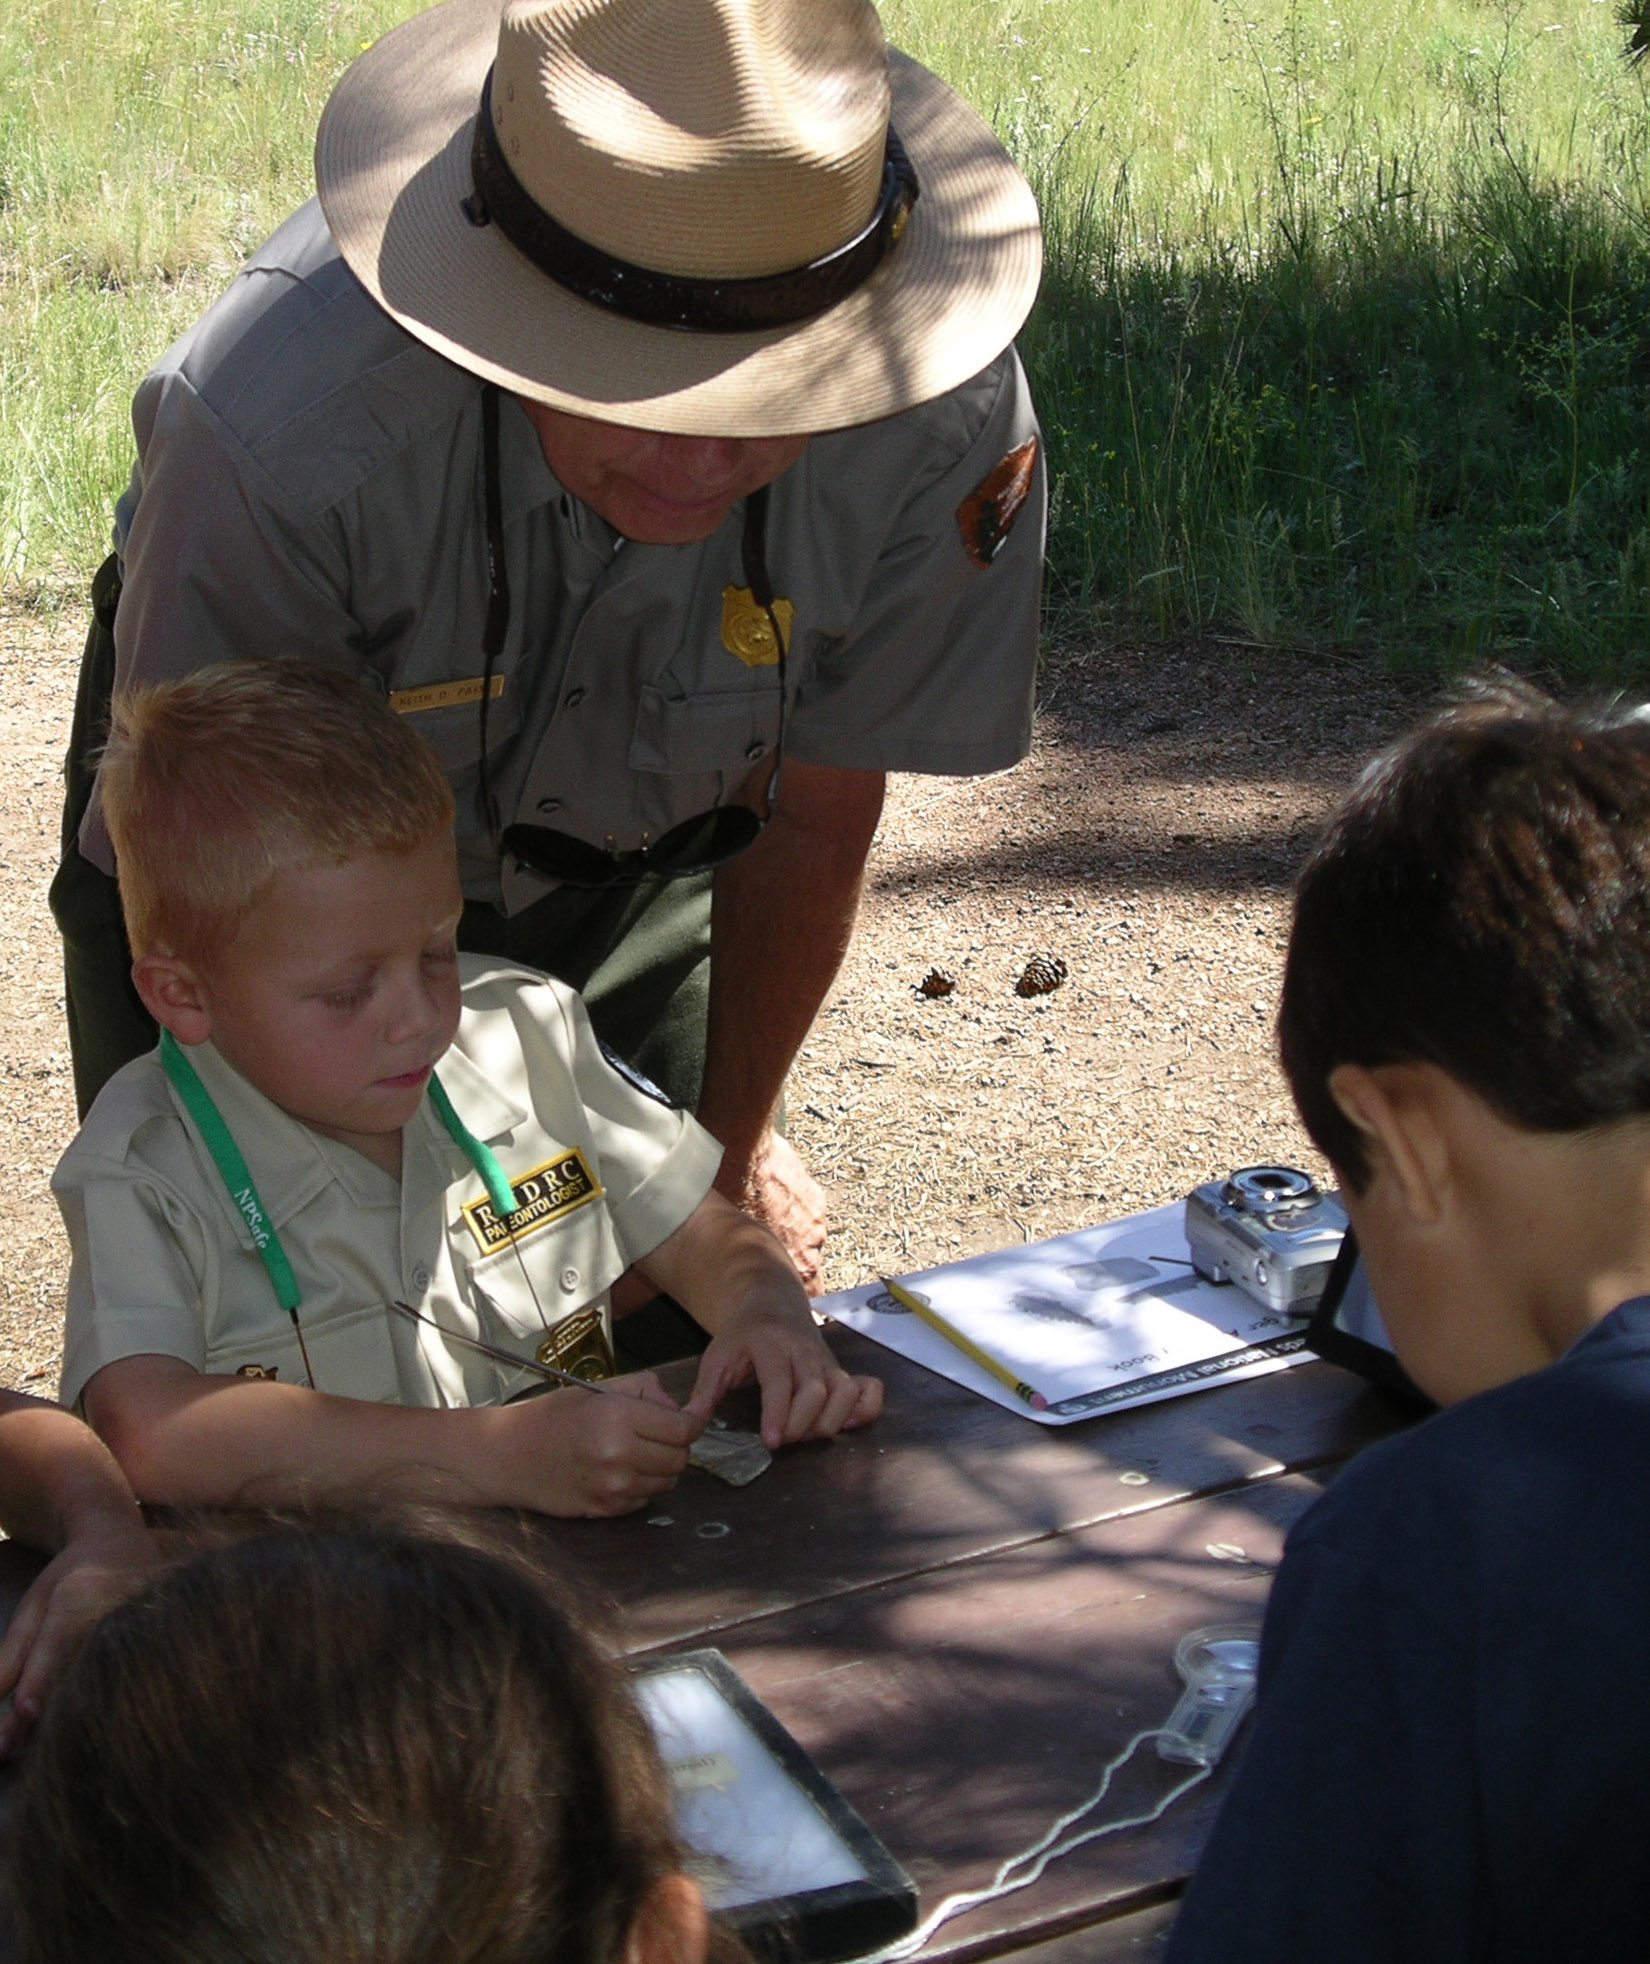 Park ranger instructs junior ranger in paleontology activity